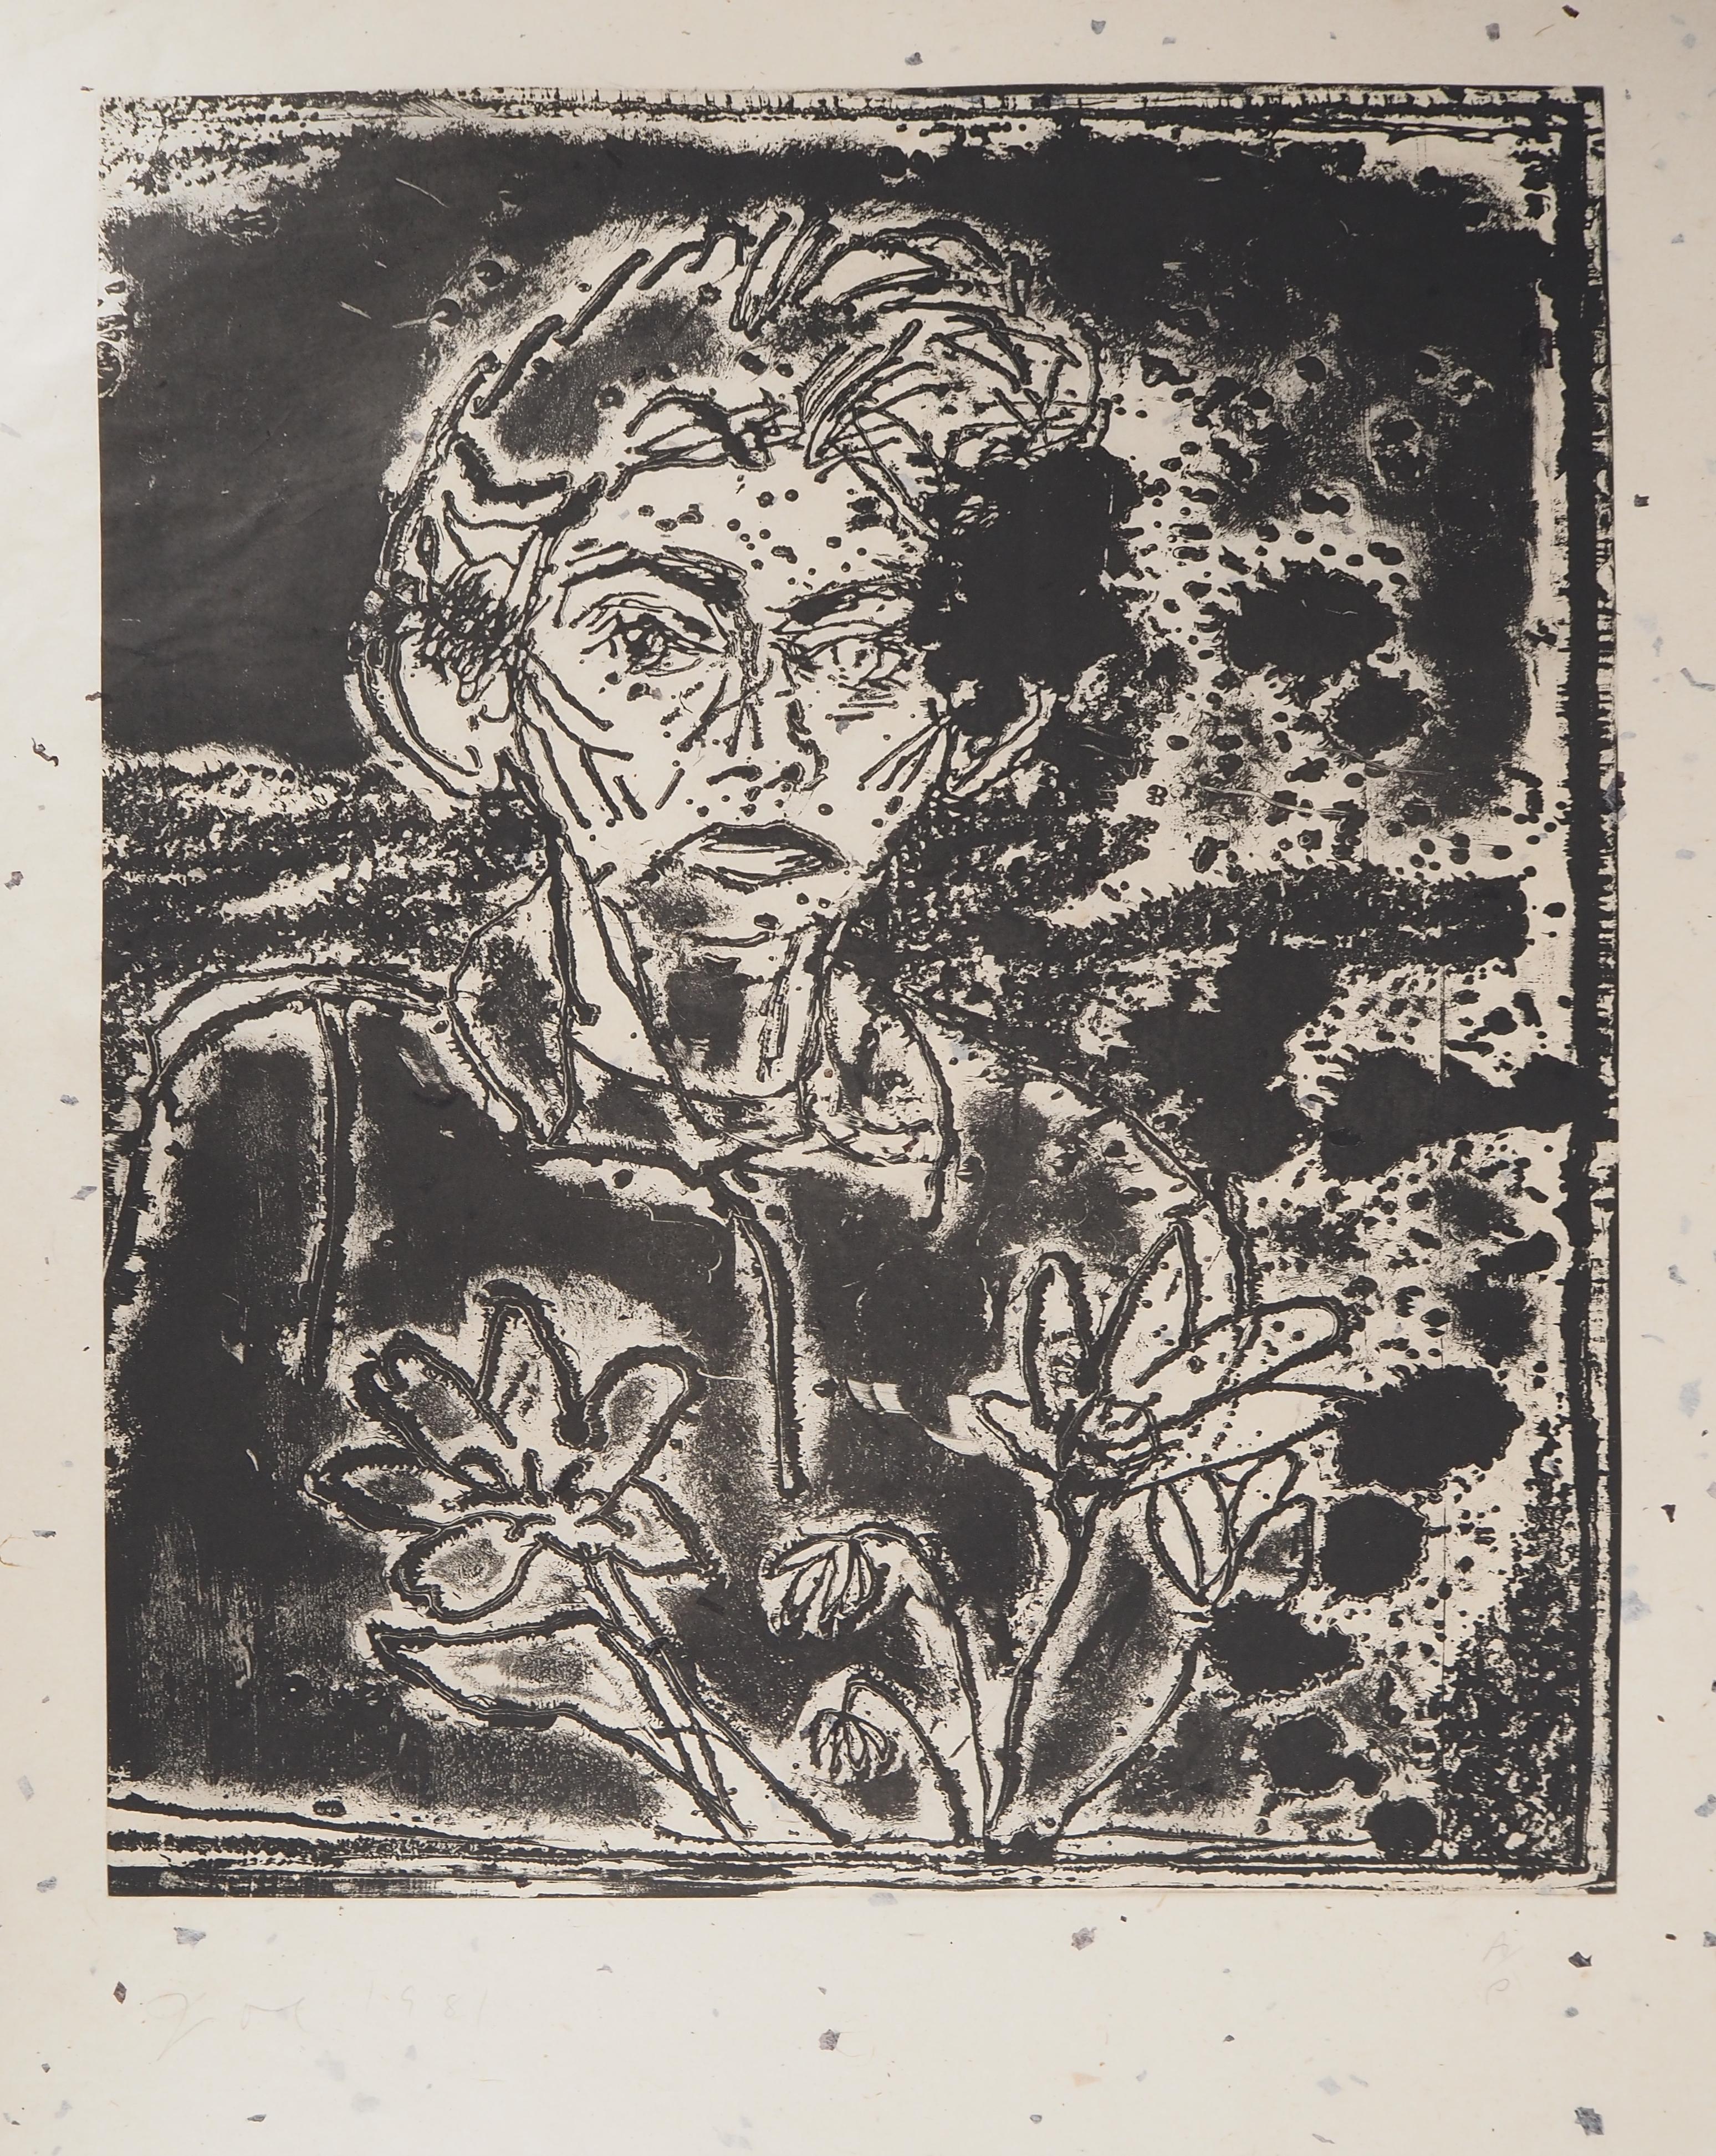 Jim Dine Portrait Print - Nancy outside in july XXIII - Original handsigned etching